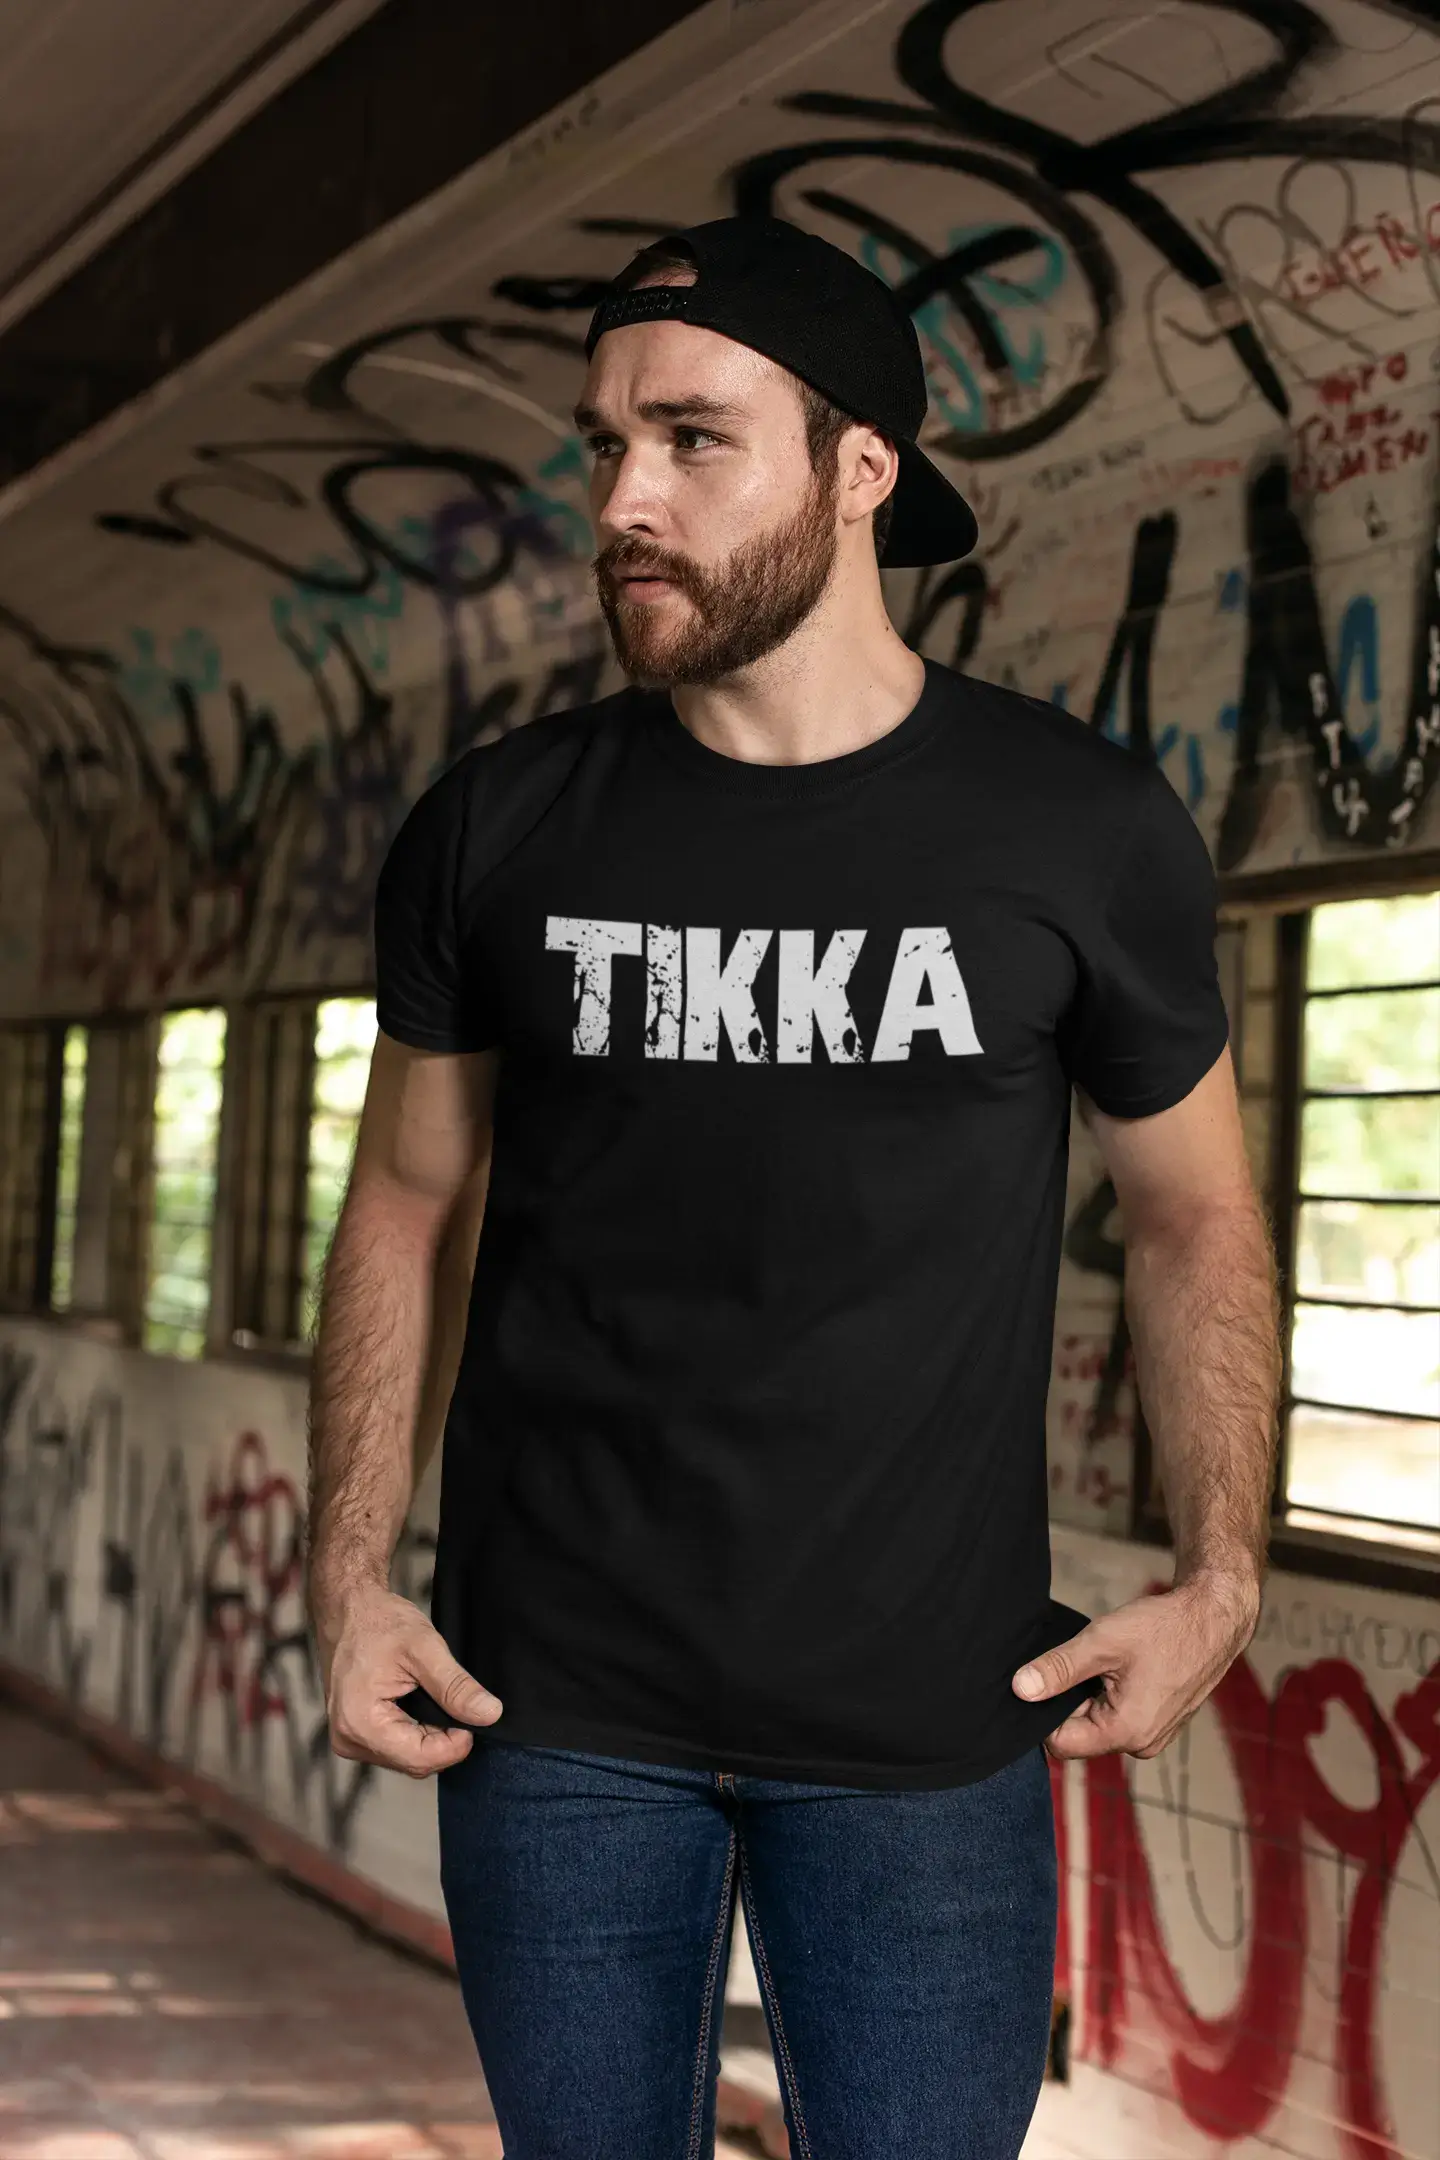 tikka Men's Retro T shirt Black Birthday Gift 00553